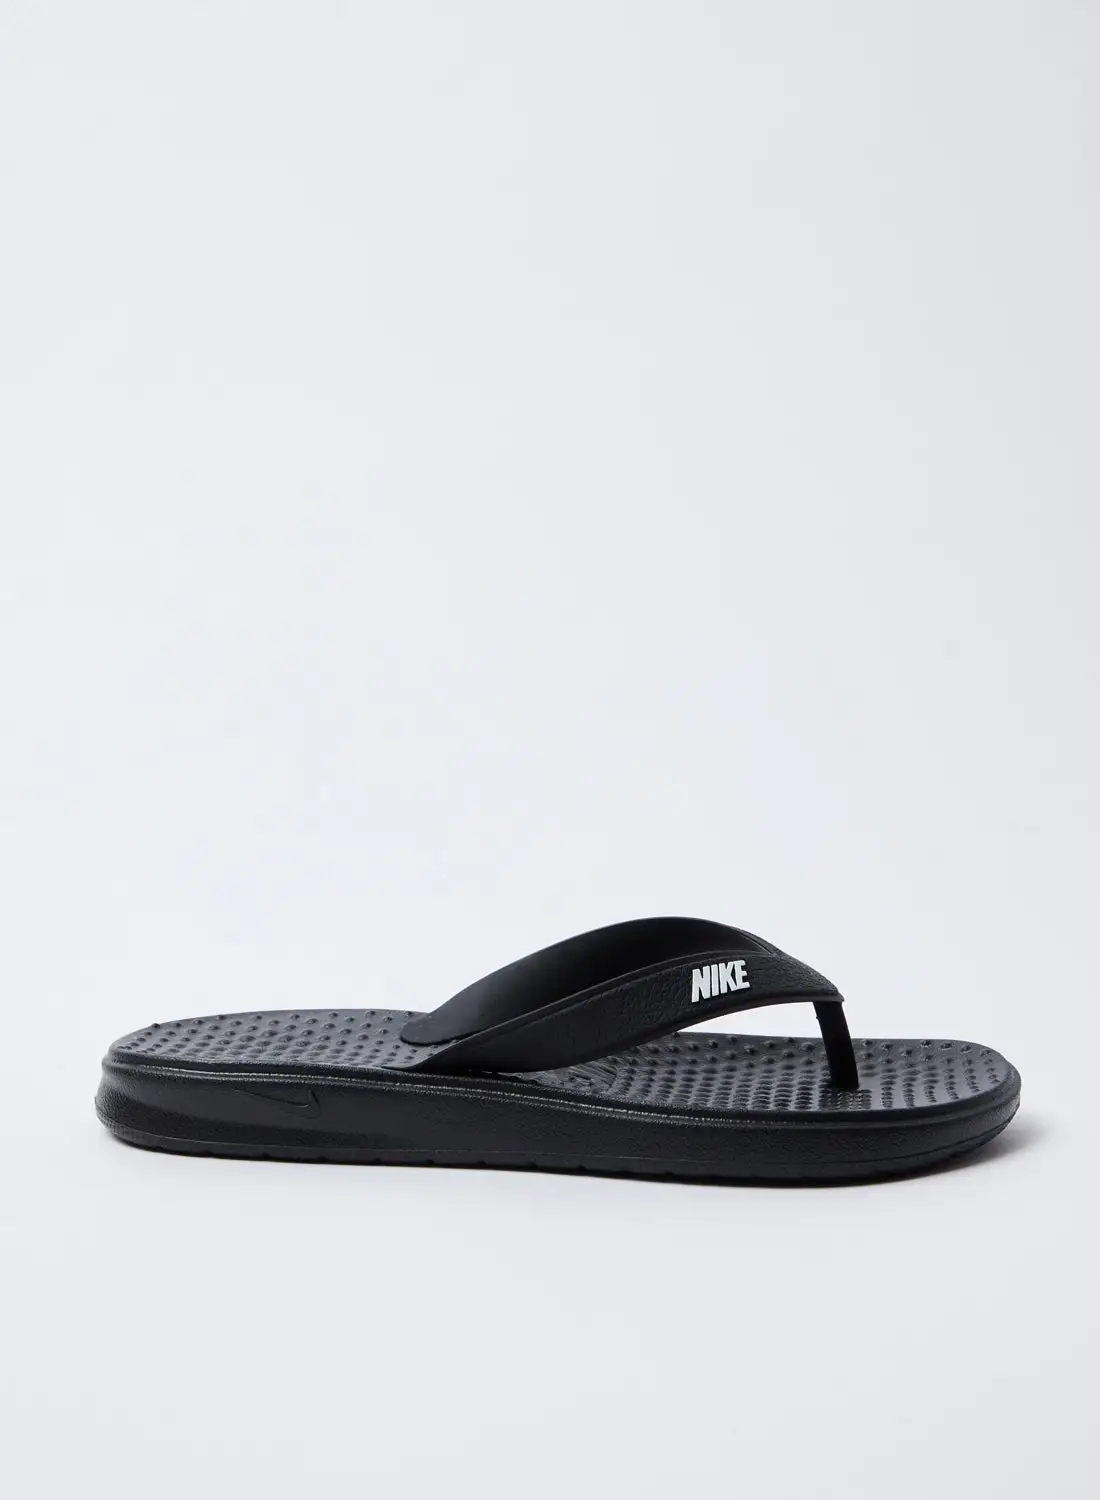 Nike Solay Thong Flip Flops Black/White